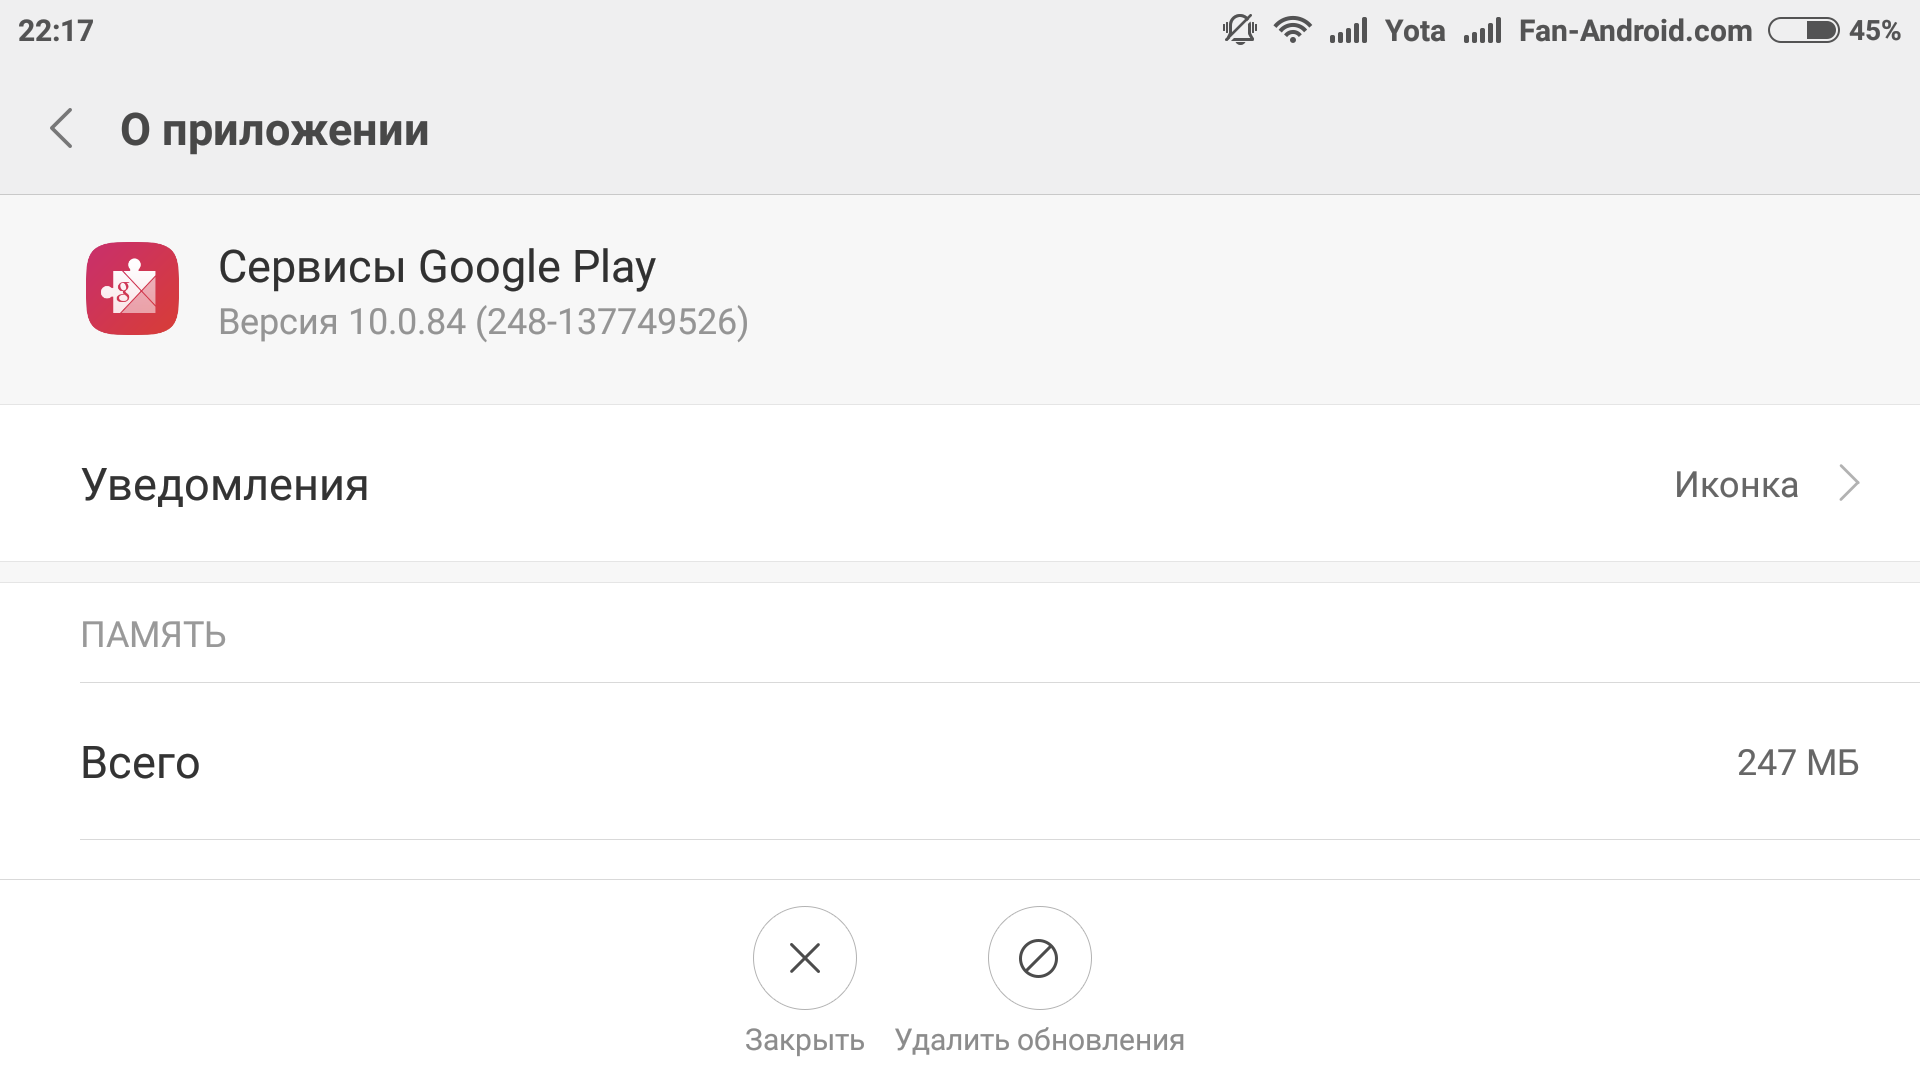 Сервис google play как исправить. Сервисы Google Play. Ошибка сервисов Google Play. Приложение сервисы Google Play остановлено. Ошибка сервисы Google Play андроид.